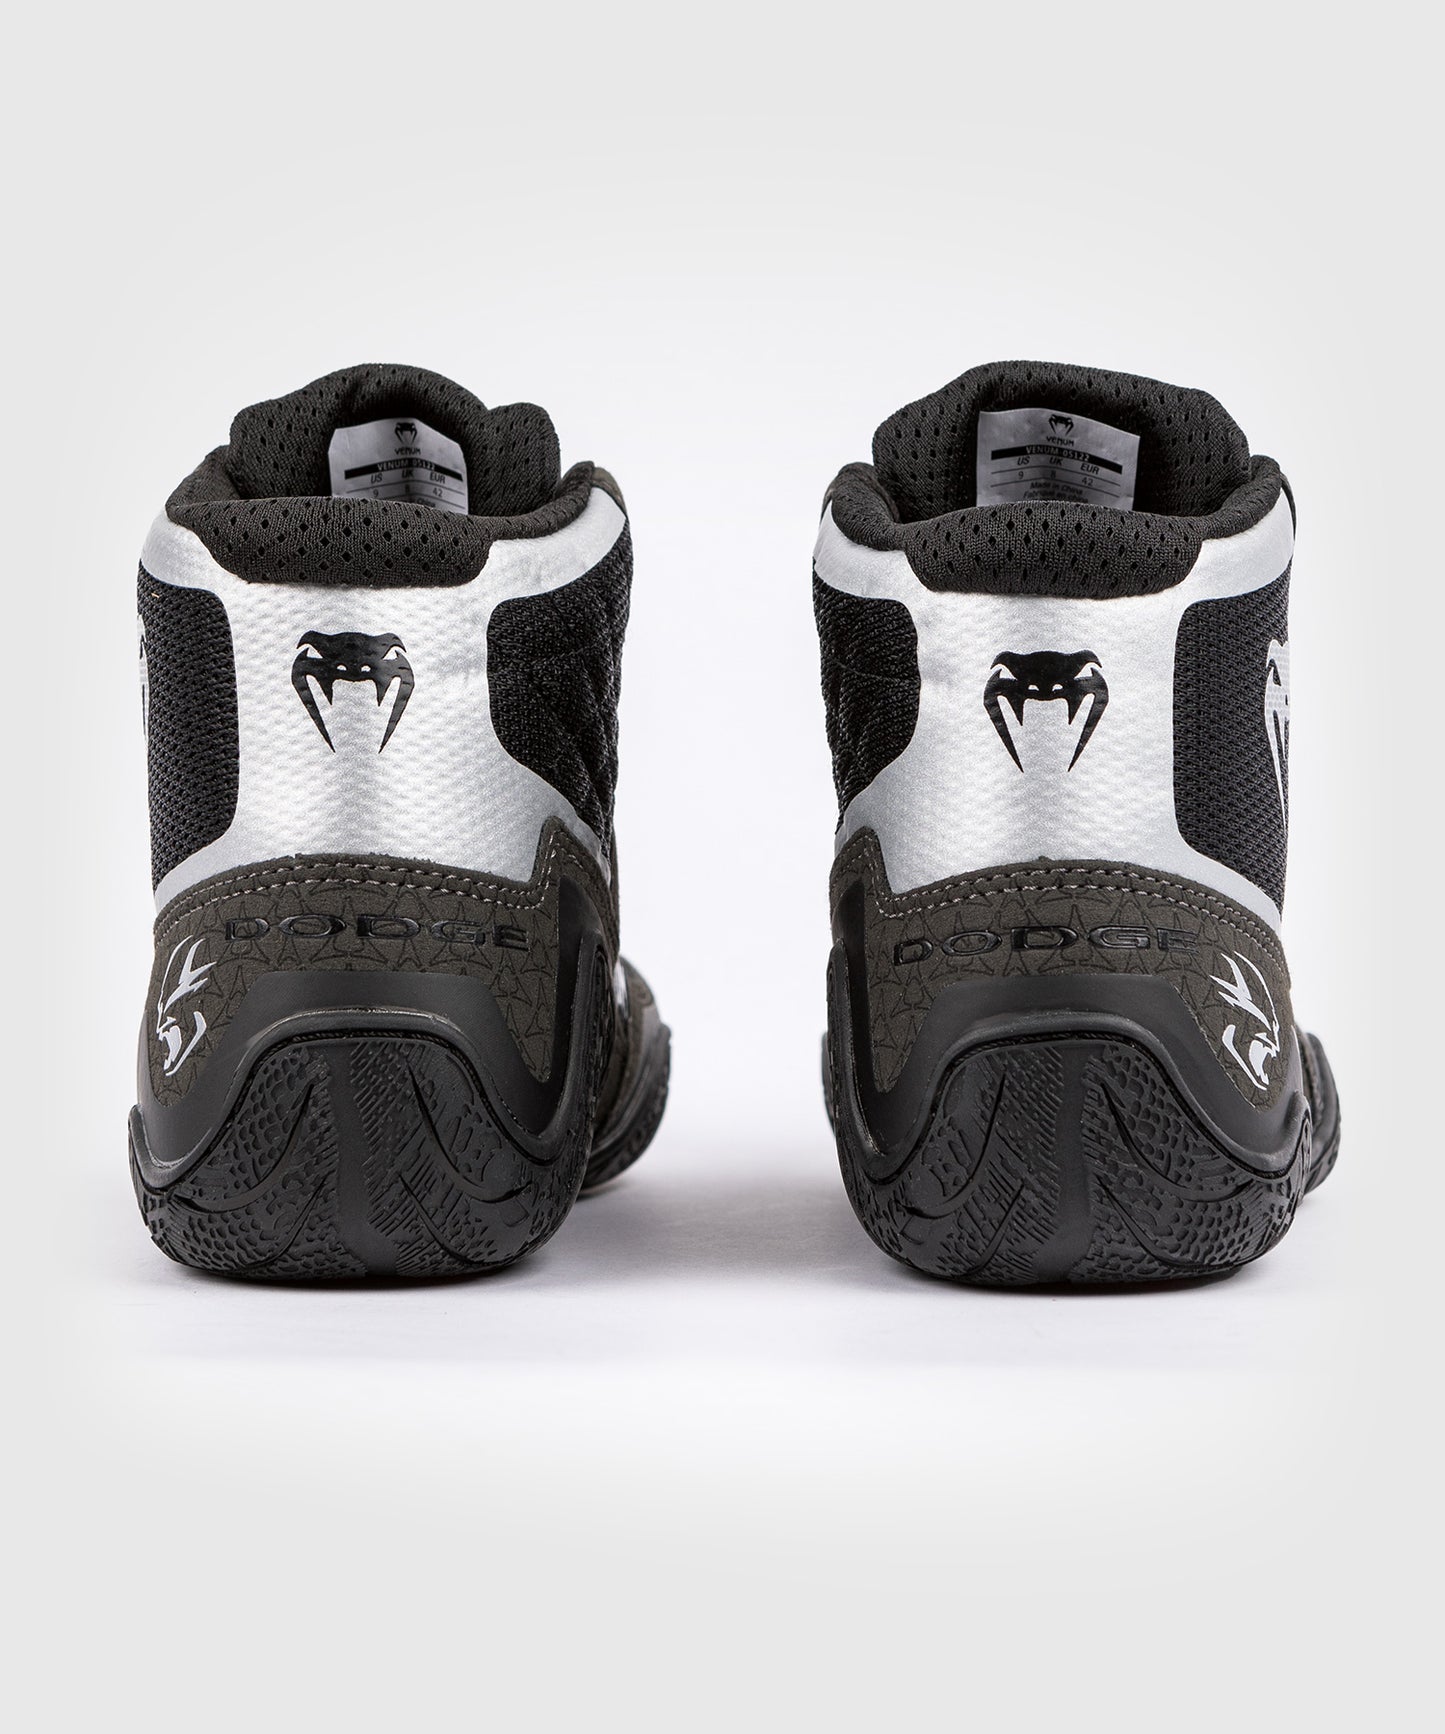 Venum x Dodge Banshee Zapatillas de lucha - Negro